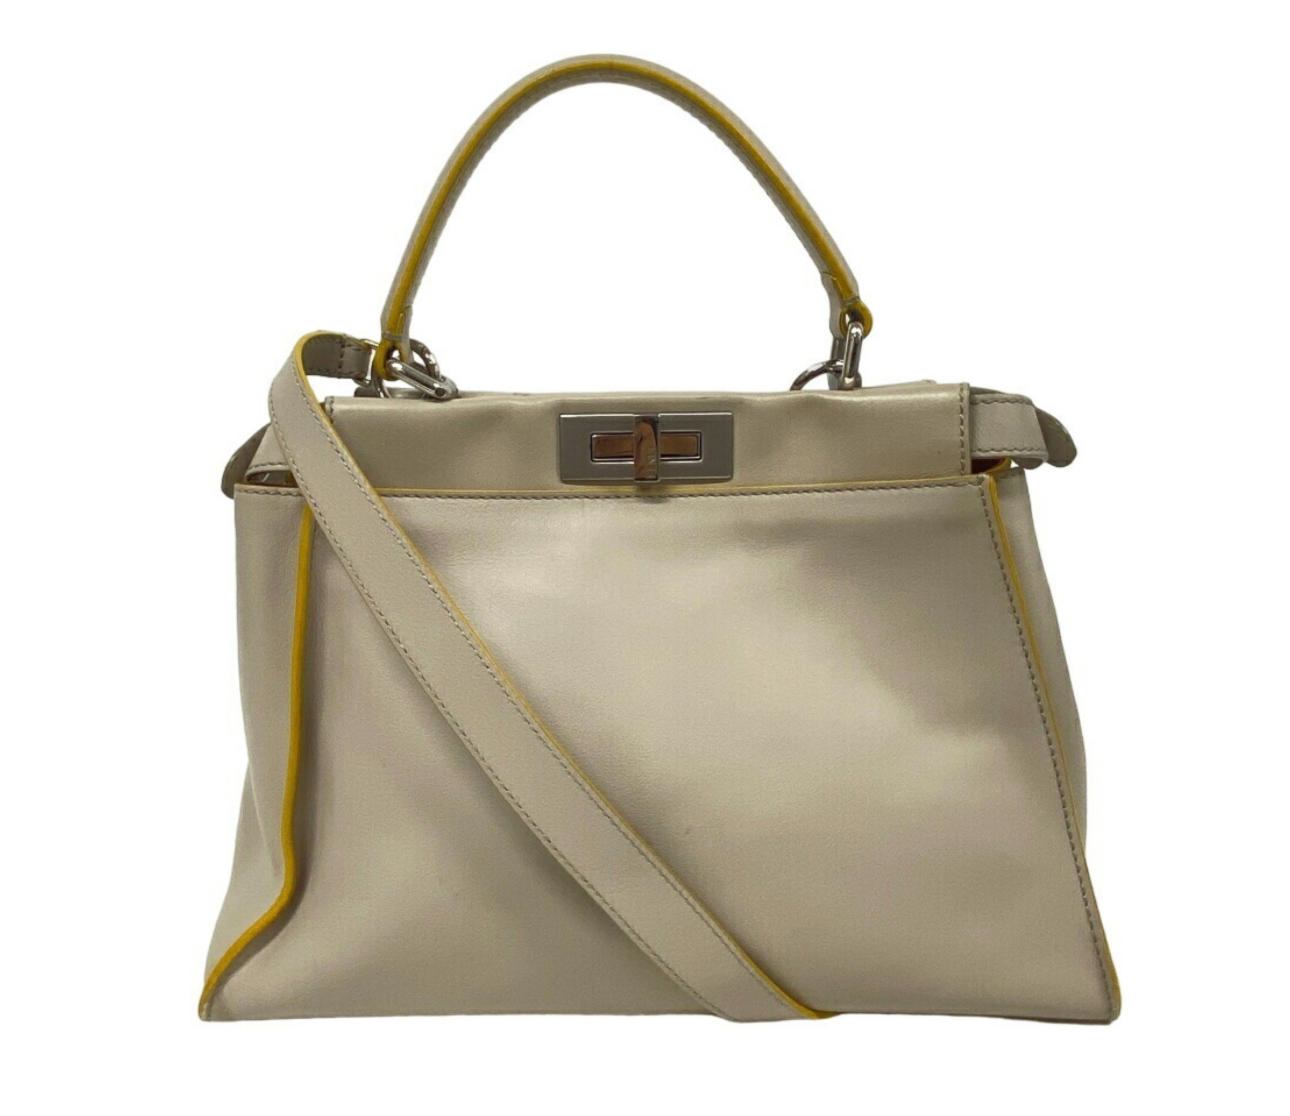 Pre-owned medium sized Peekaboo Fendi handbag, made of light gray leather and yellow trim